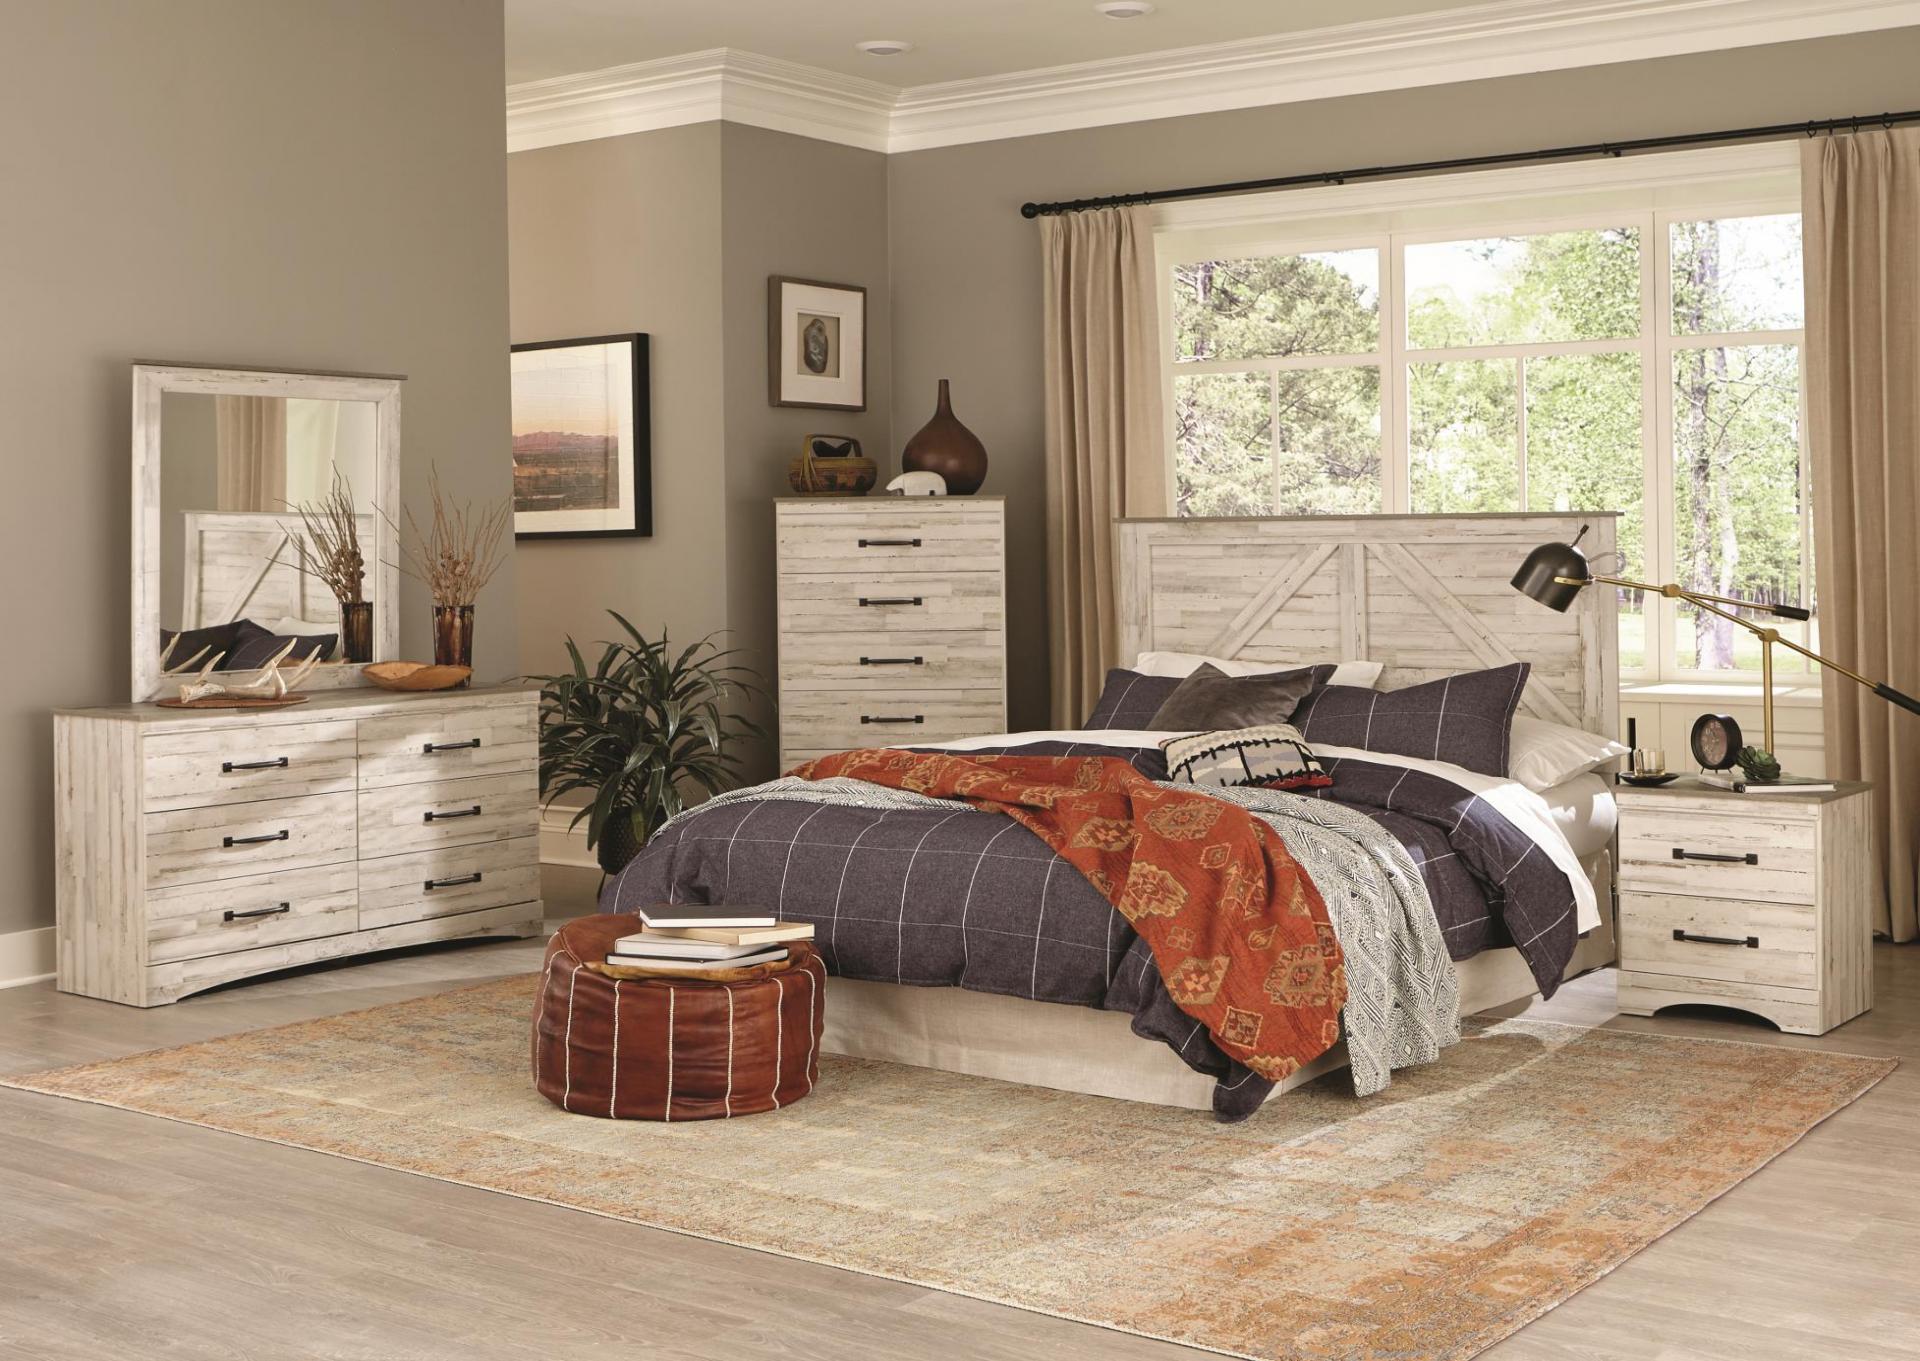 aspen bedroom furniture cambridge collection